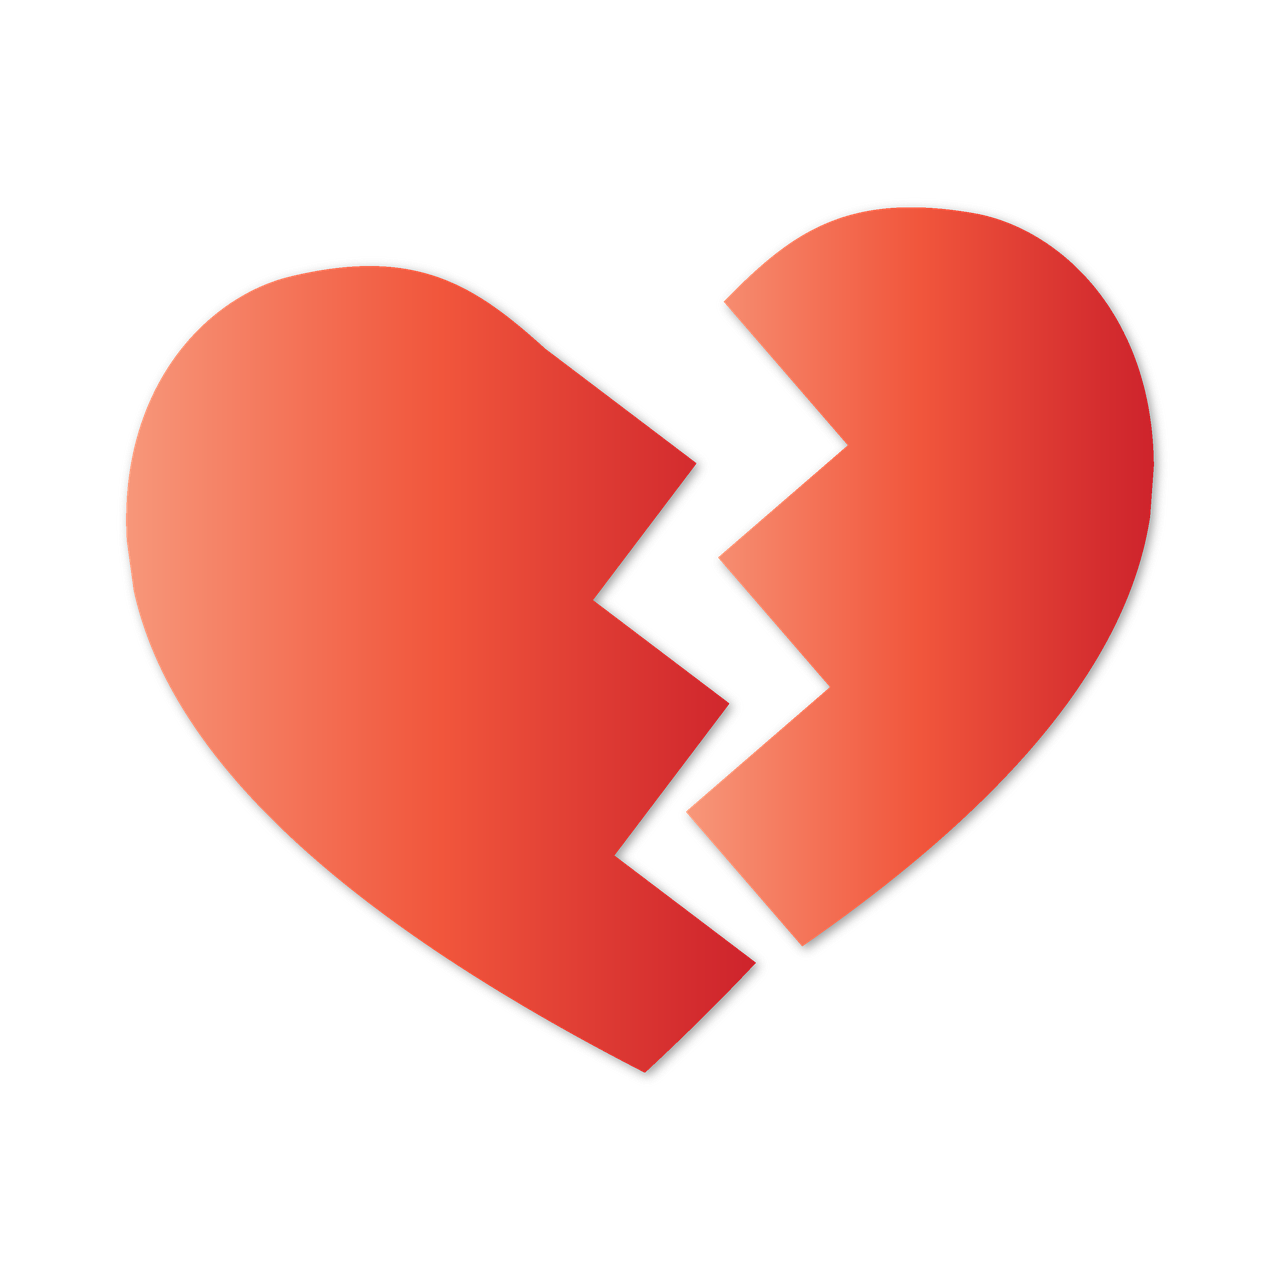 Broken Heart Background PNG Image